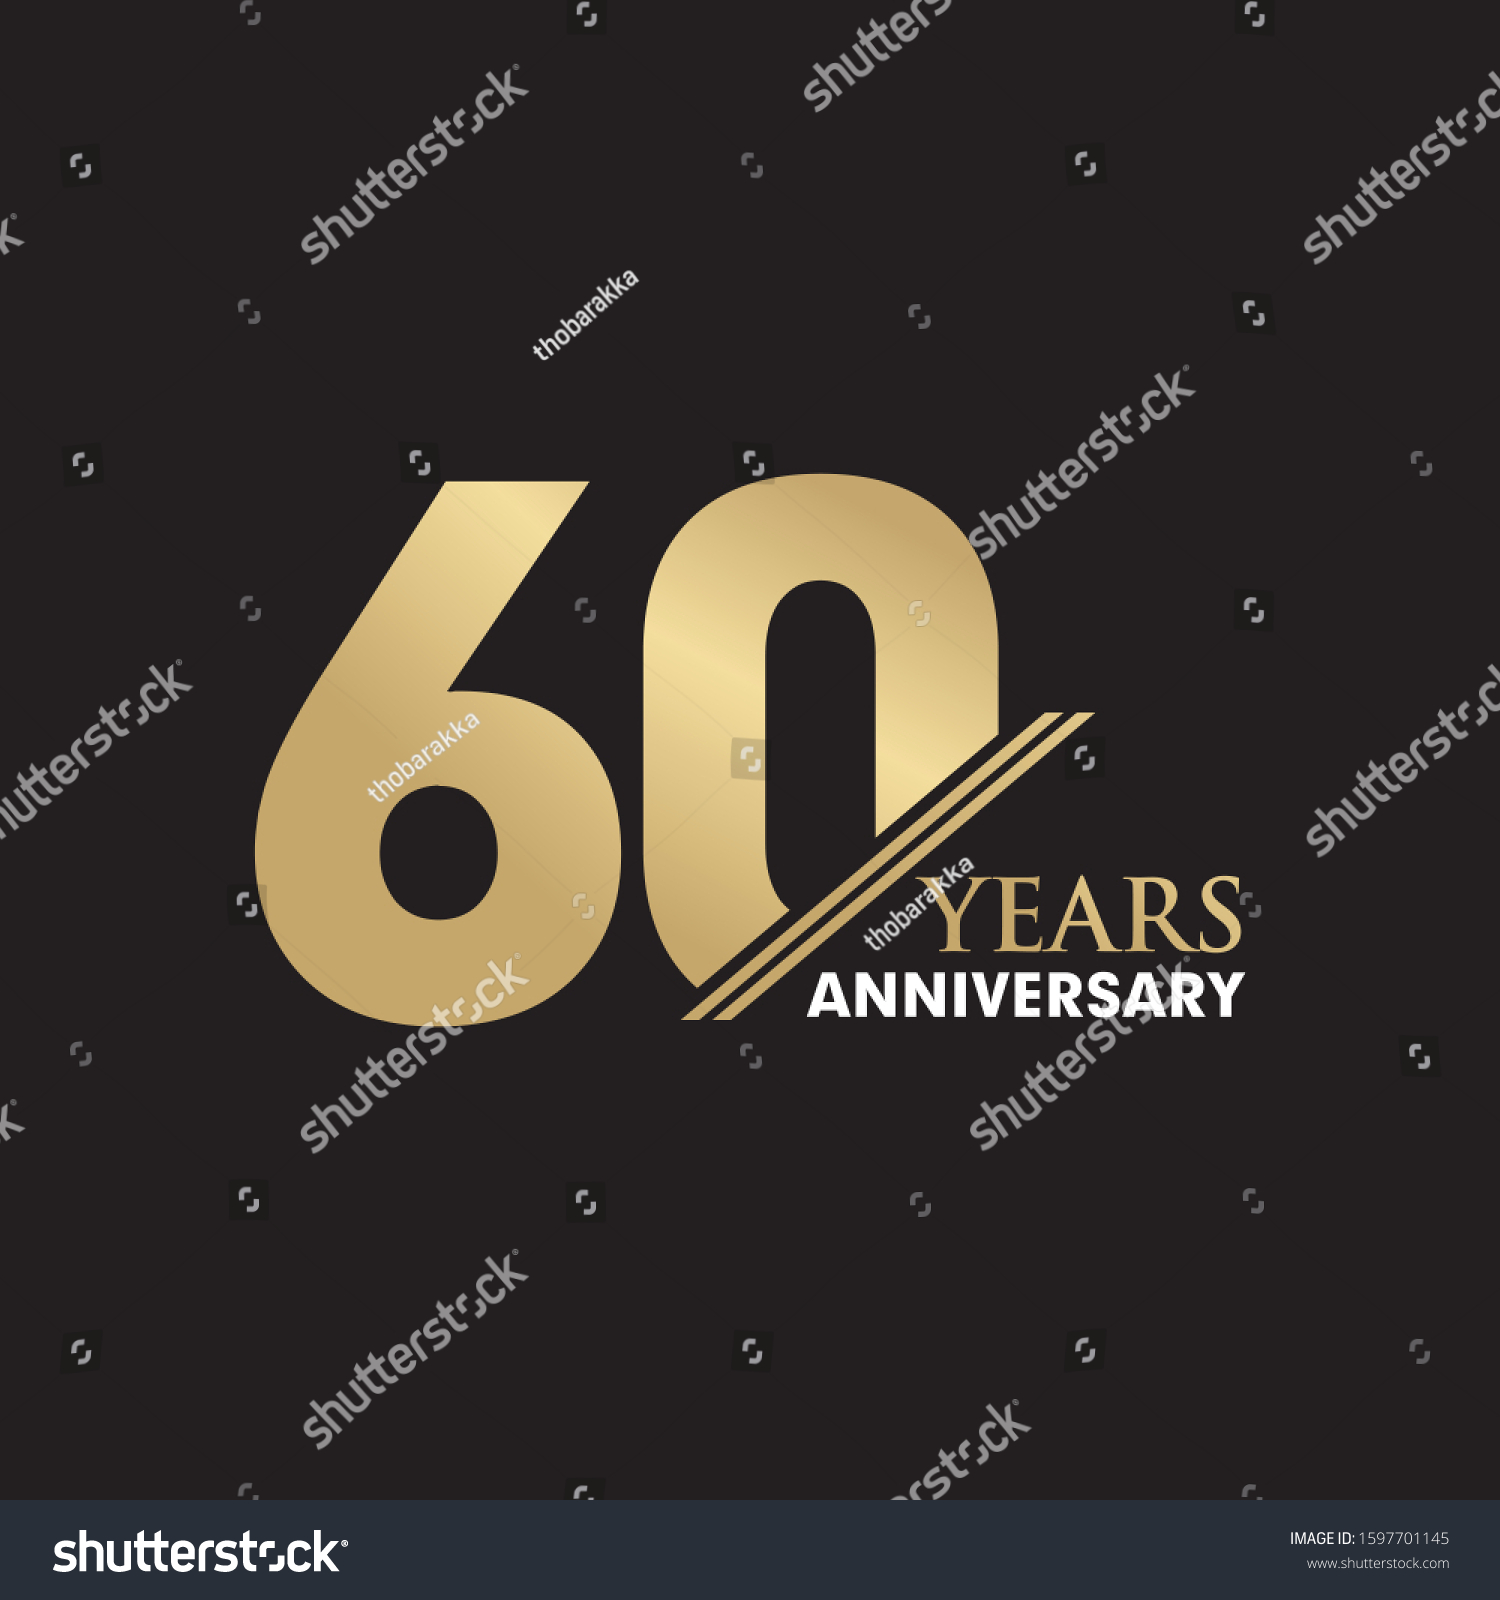 SVG of 60th Year anniversary emblem logo design inspiration vector template svg